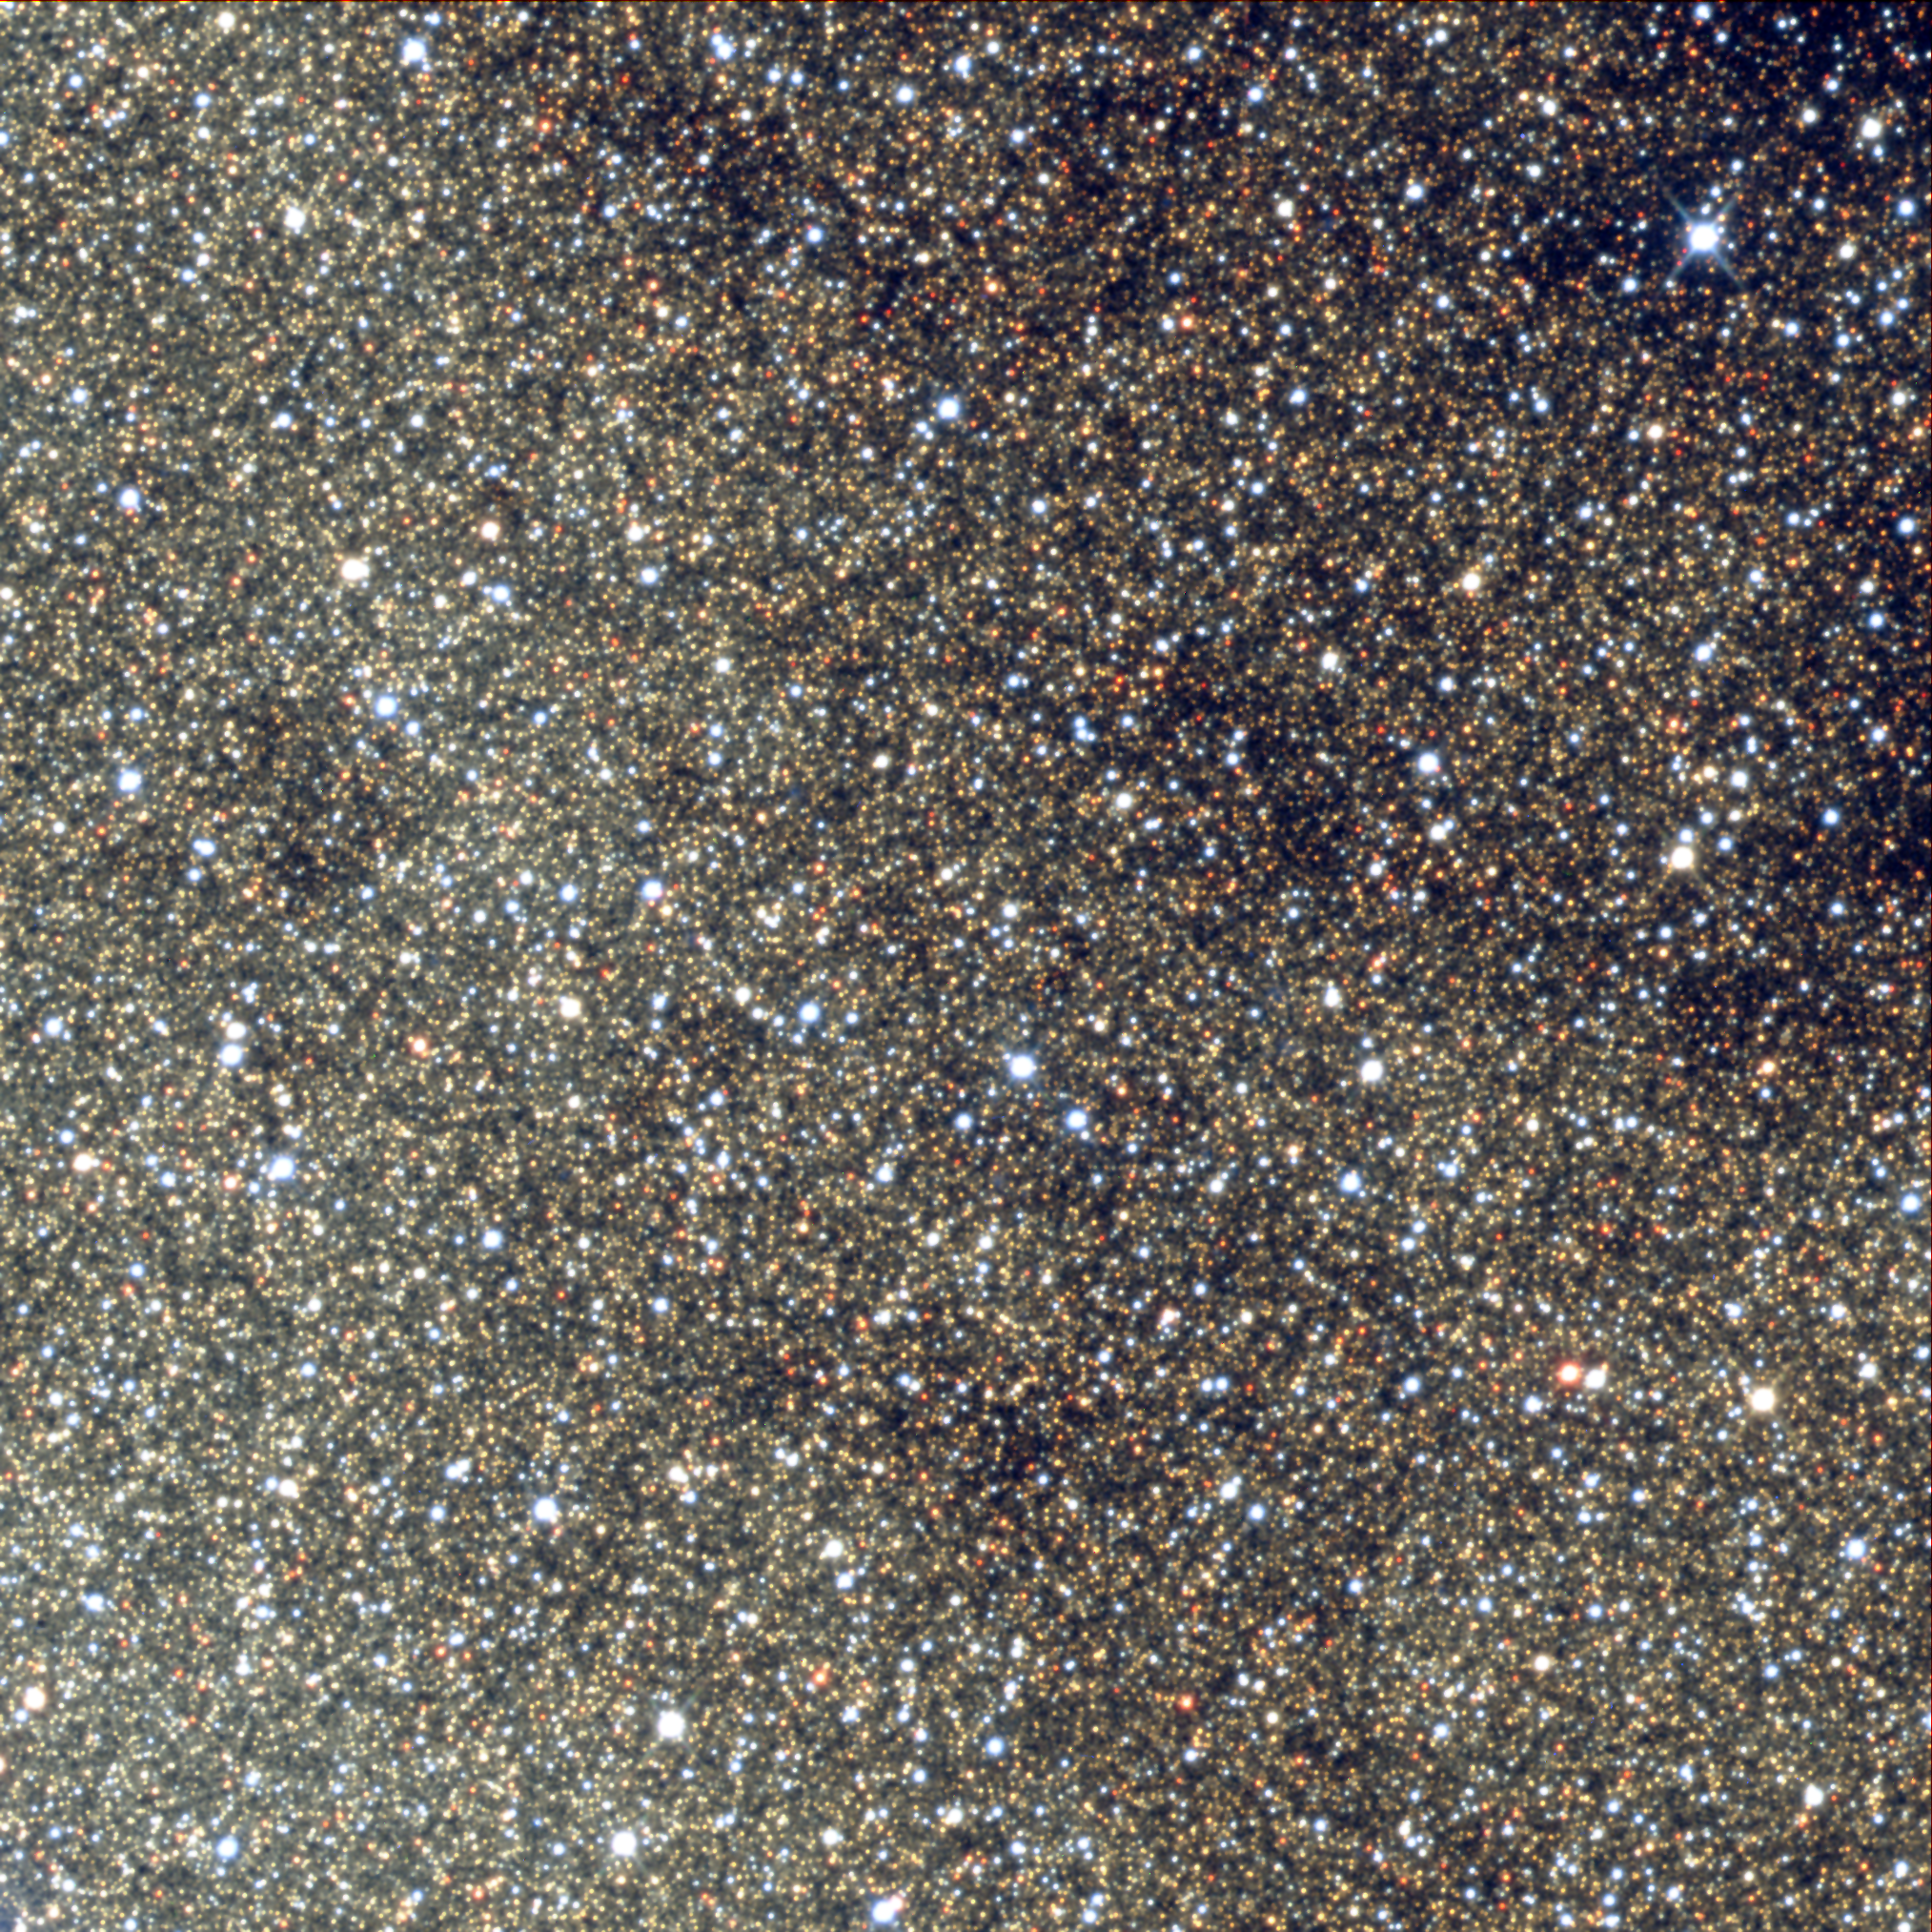 Field of OGLE-2012-BLG-0406